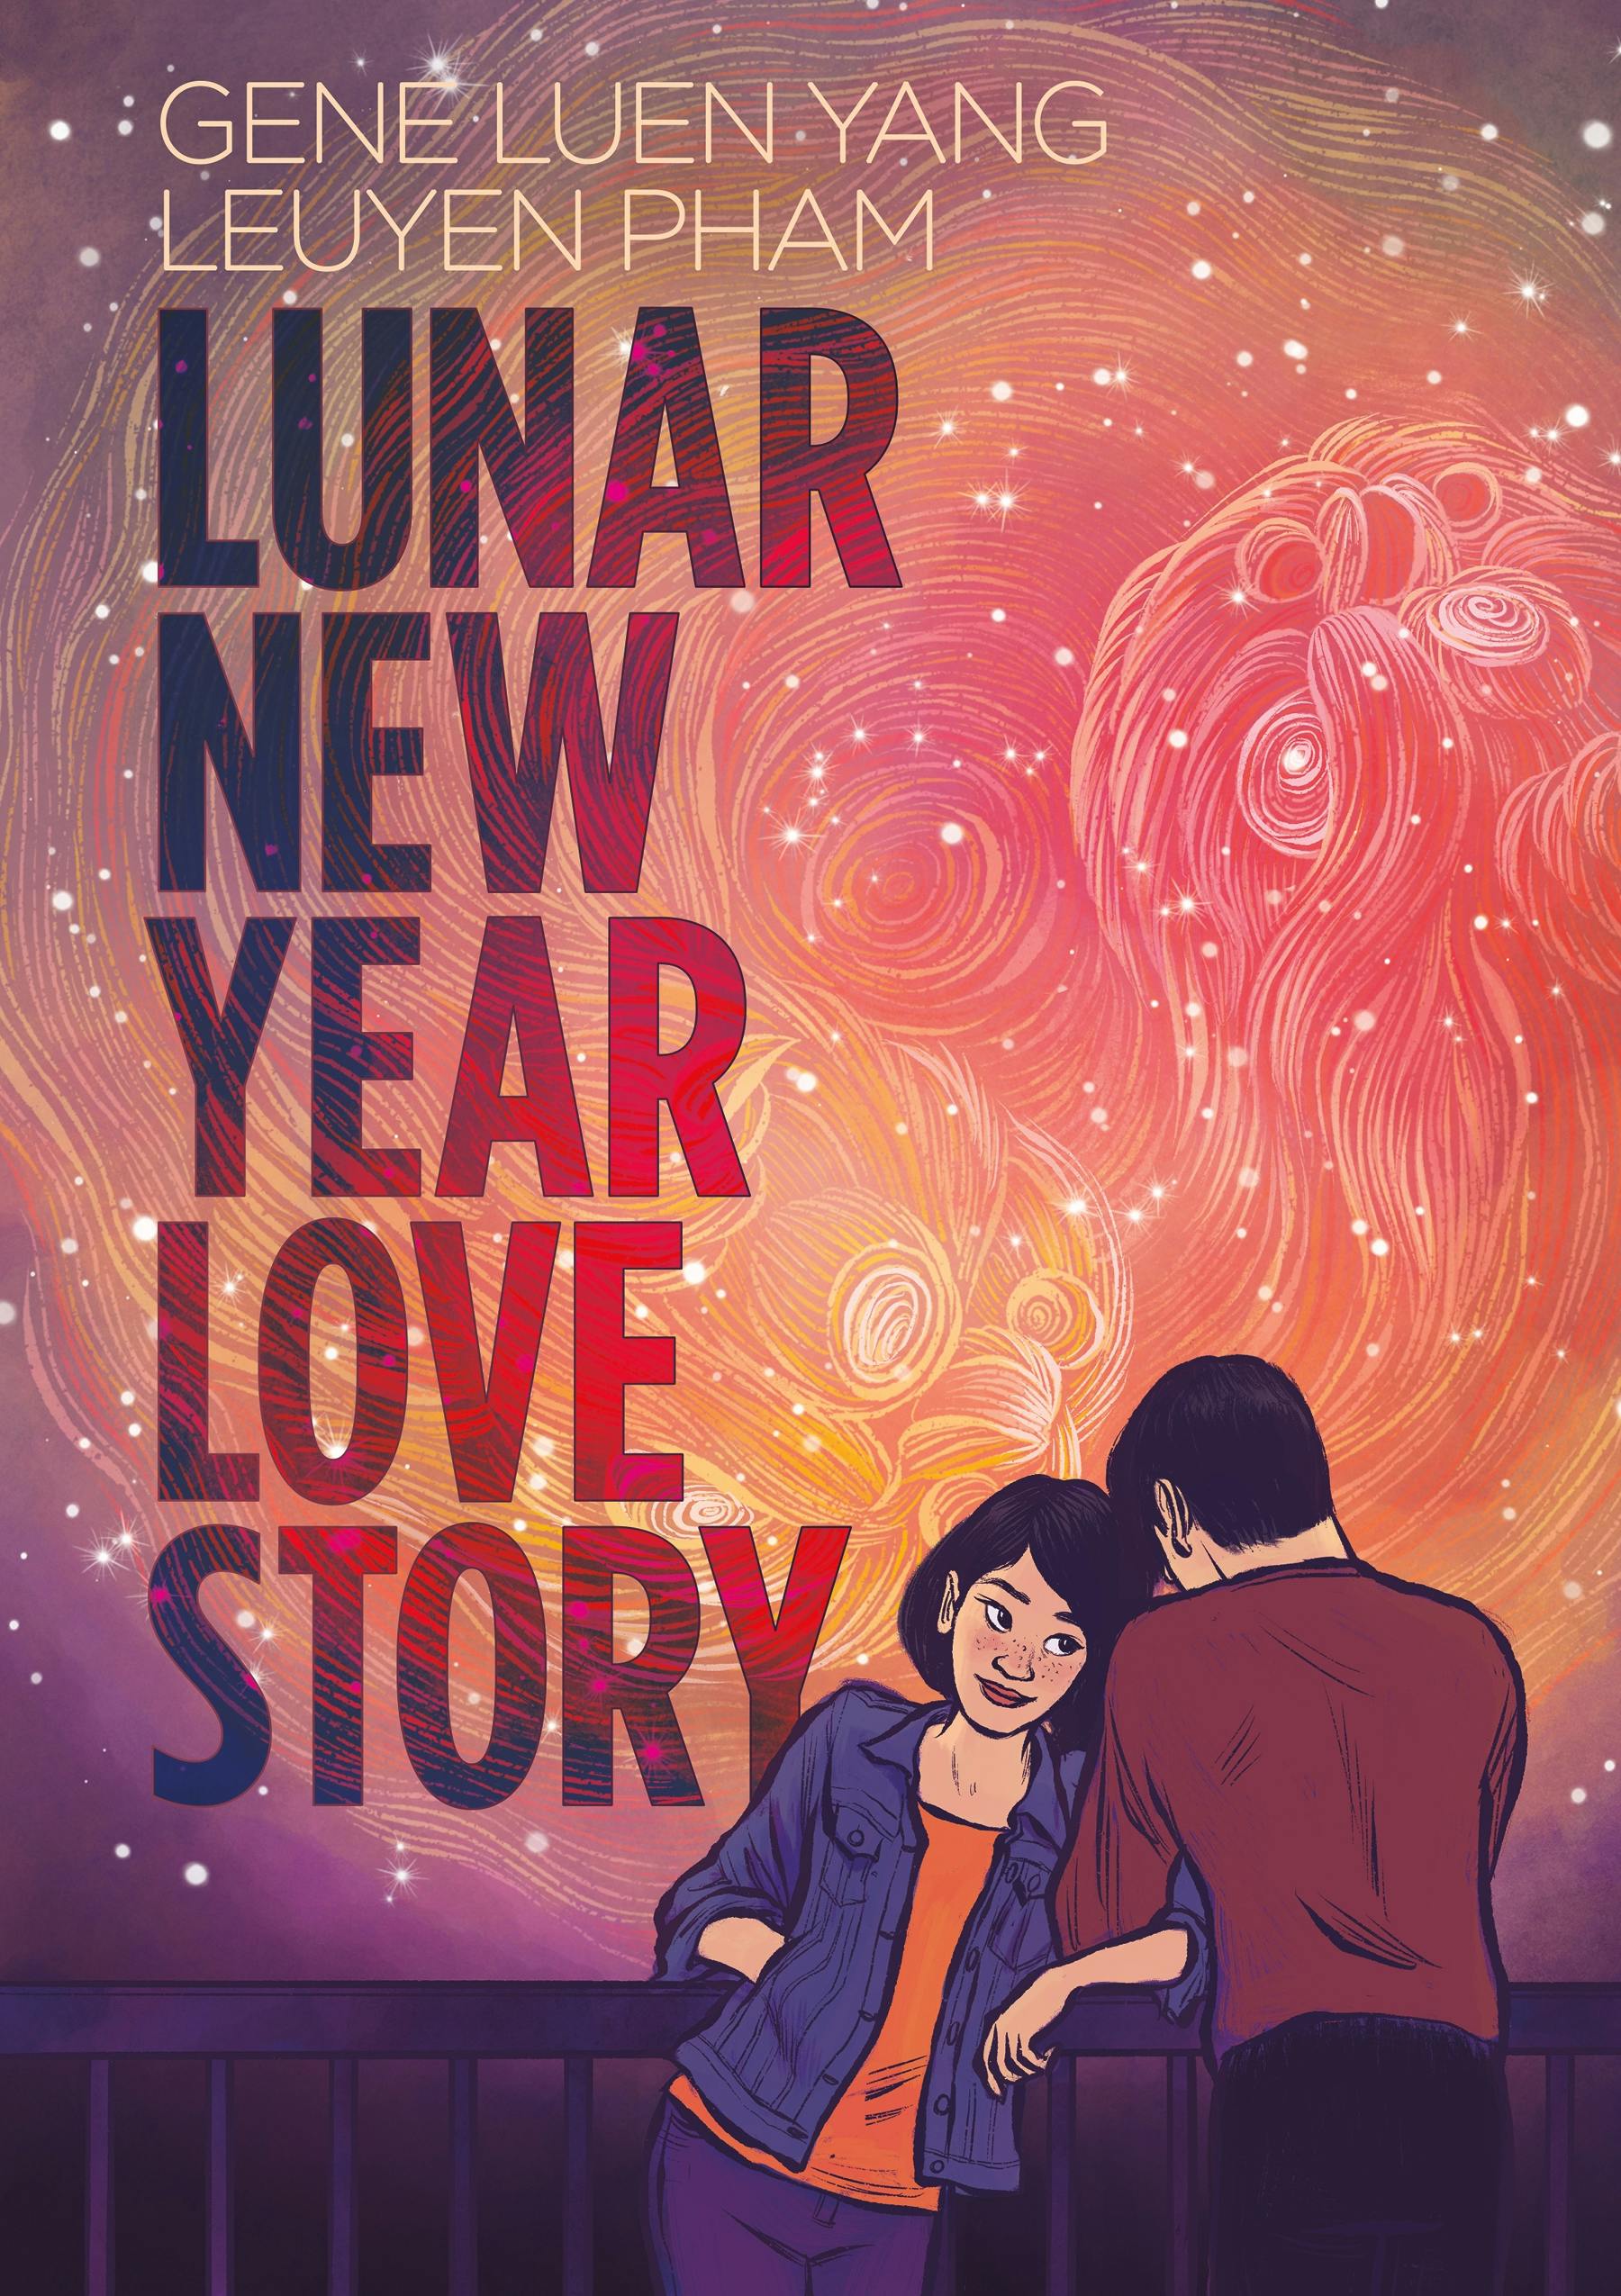 lunar-new-year-love-story